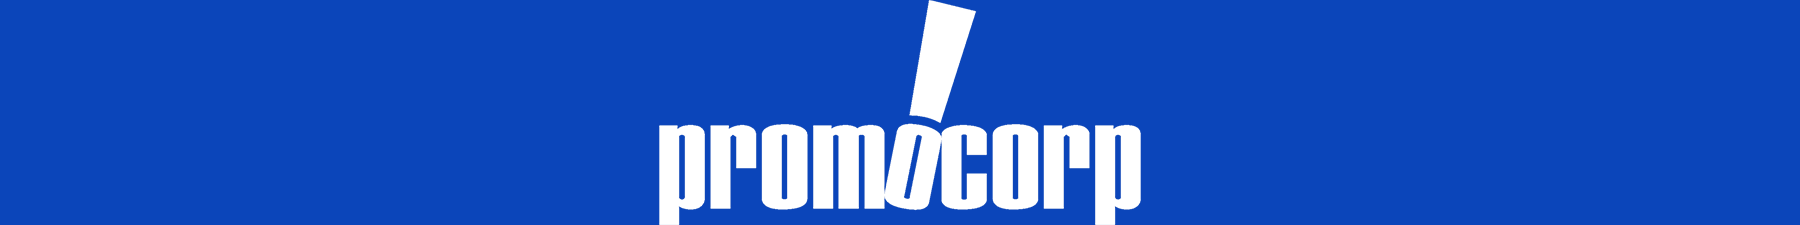 Promocorp logo